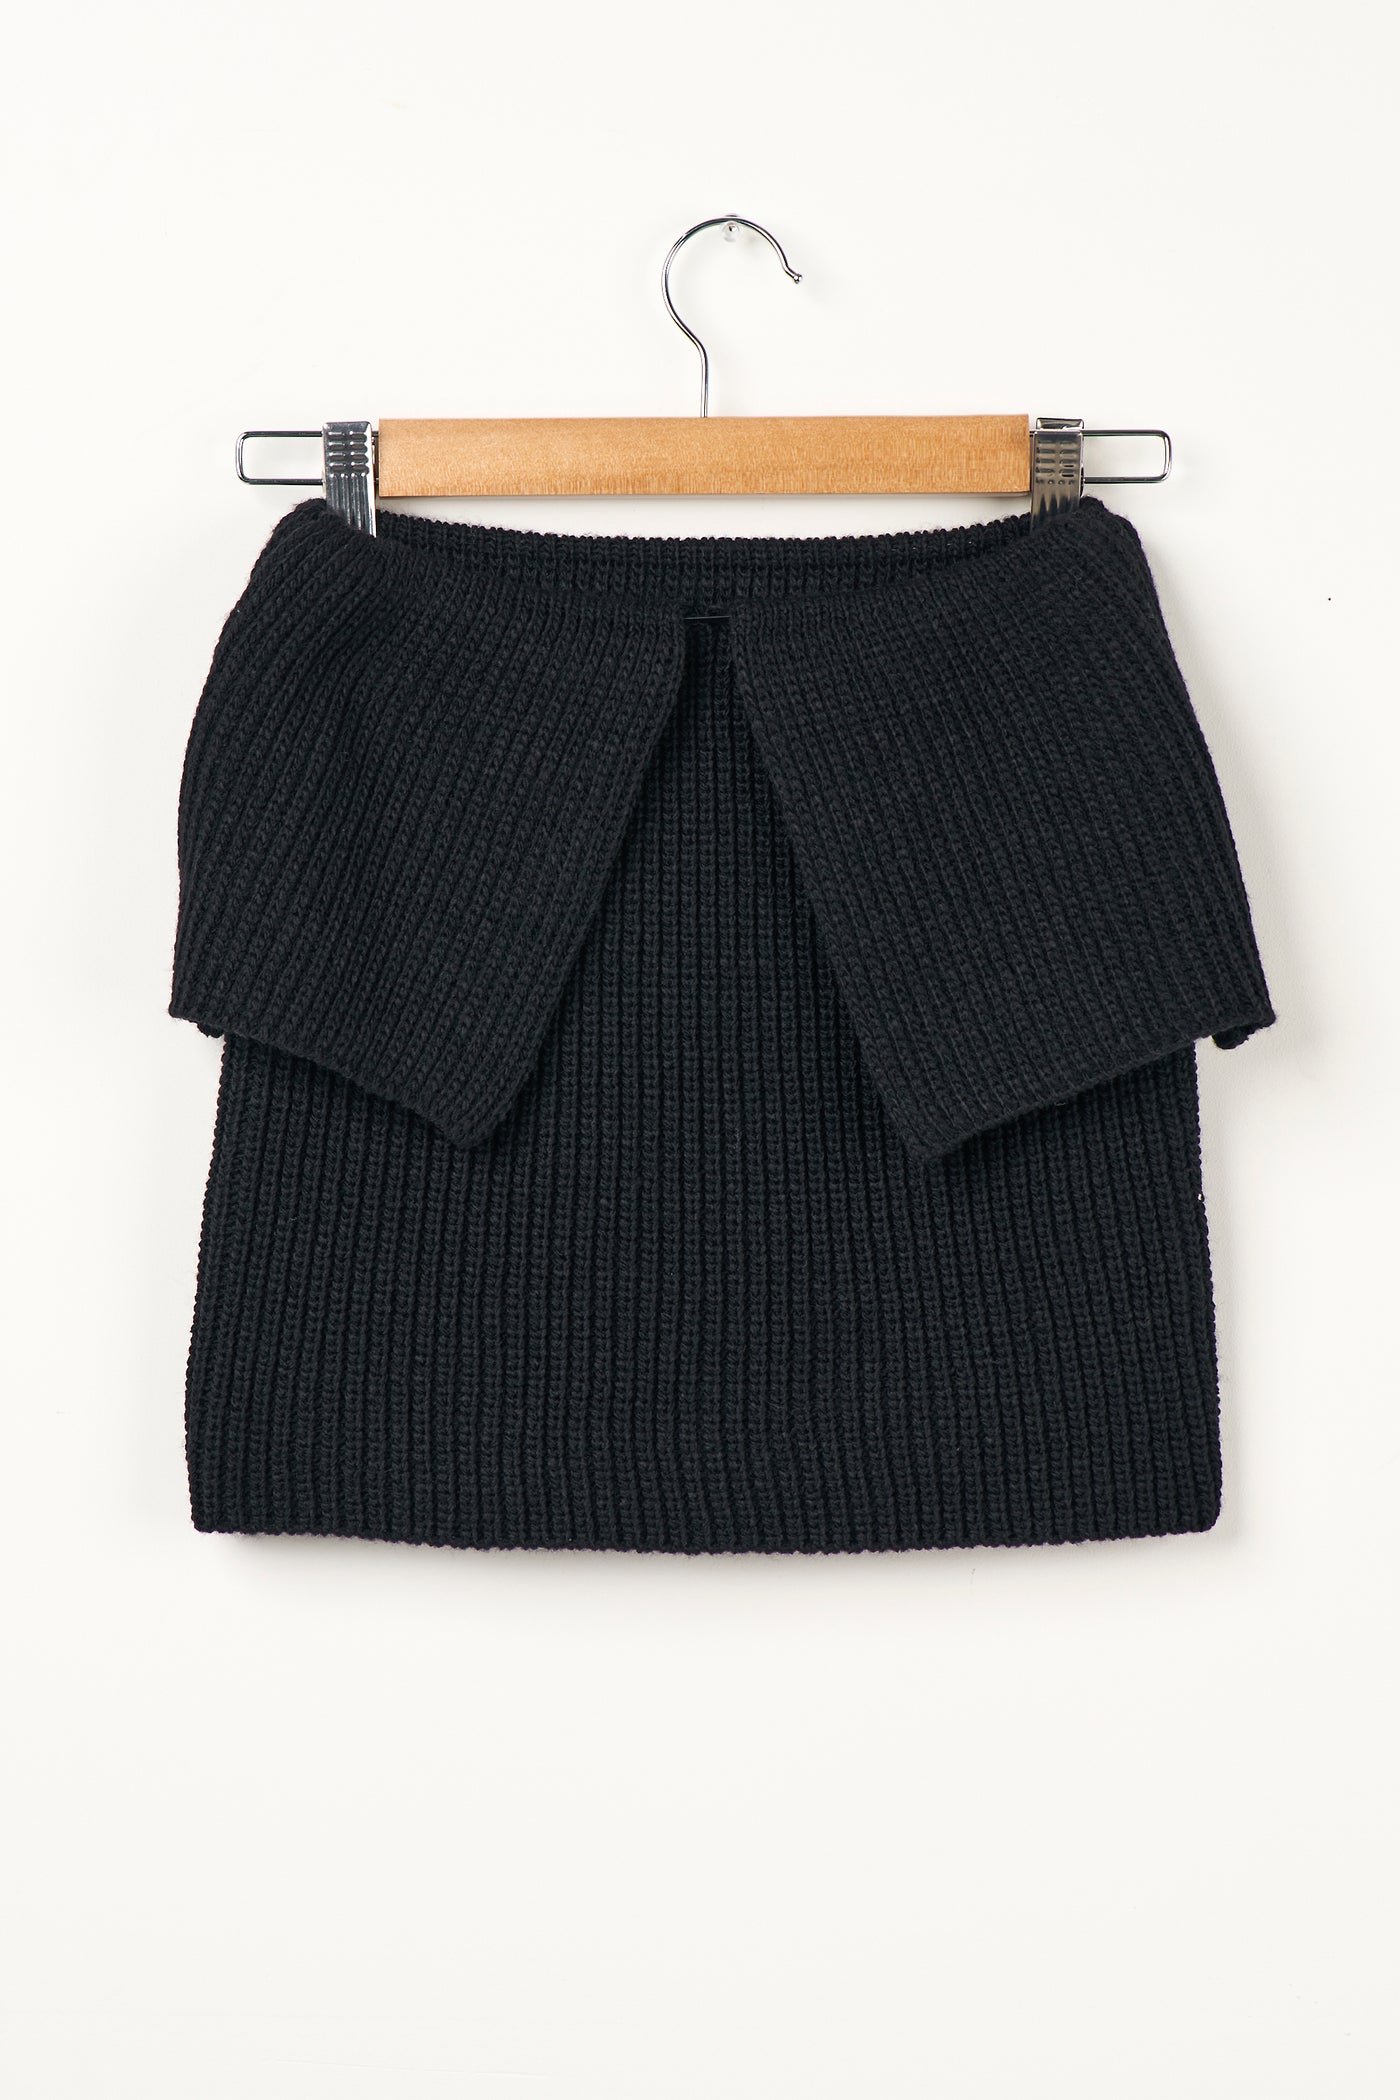 storets.com Jade Chunky Knitted Skirt